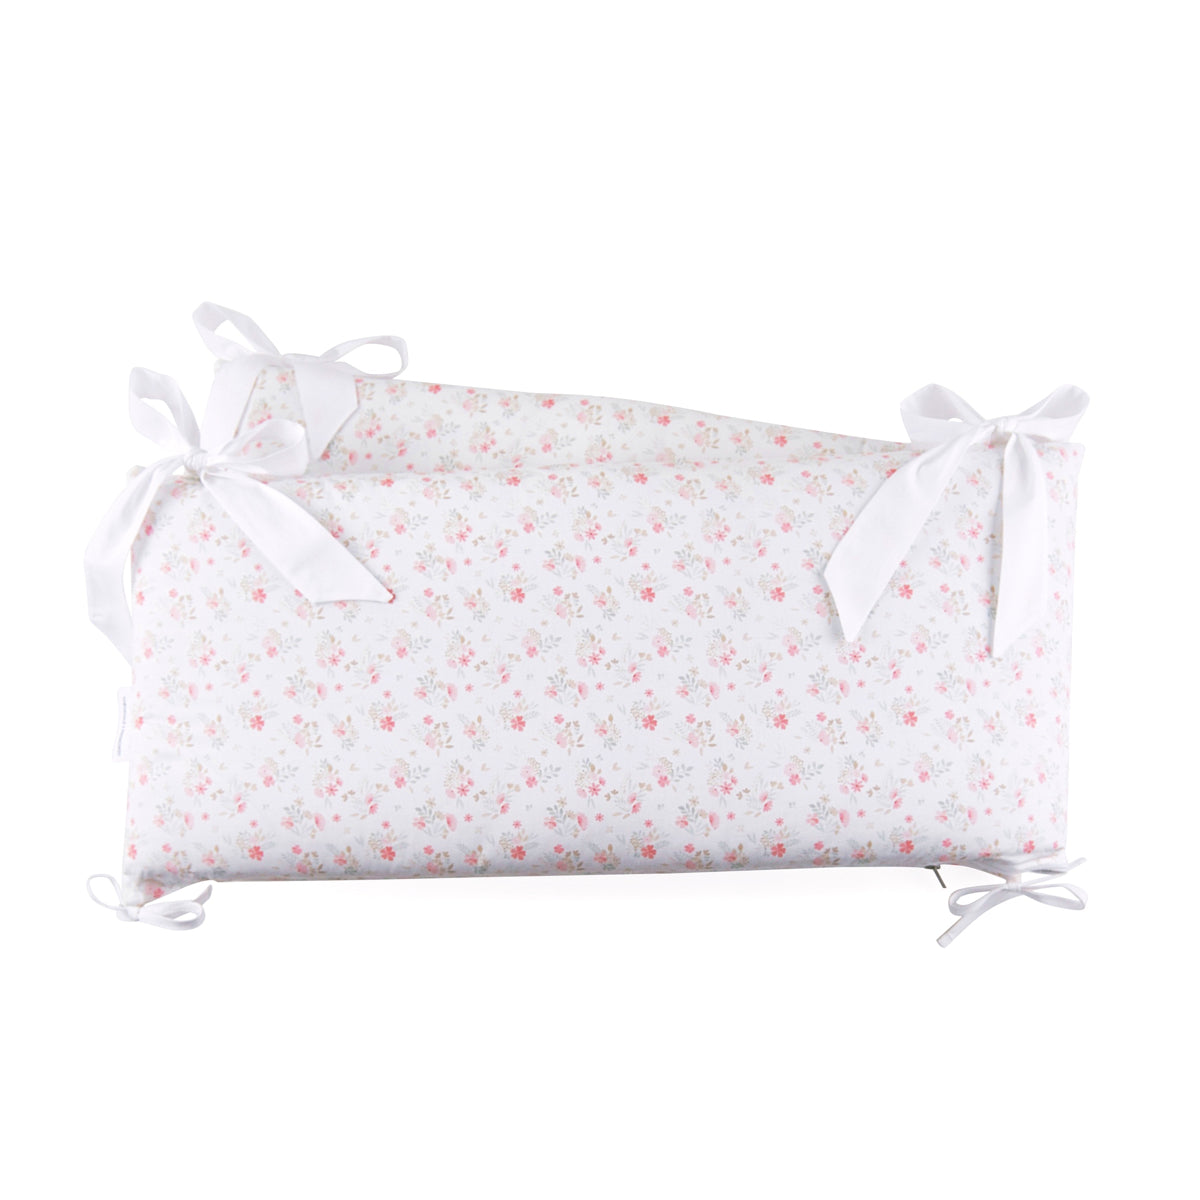 Theophile & Patachou Cot Bed Bumper 70 cm - Pink Flower